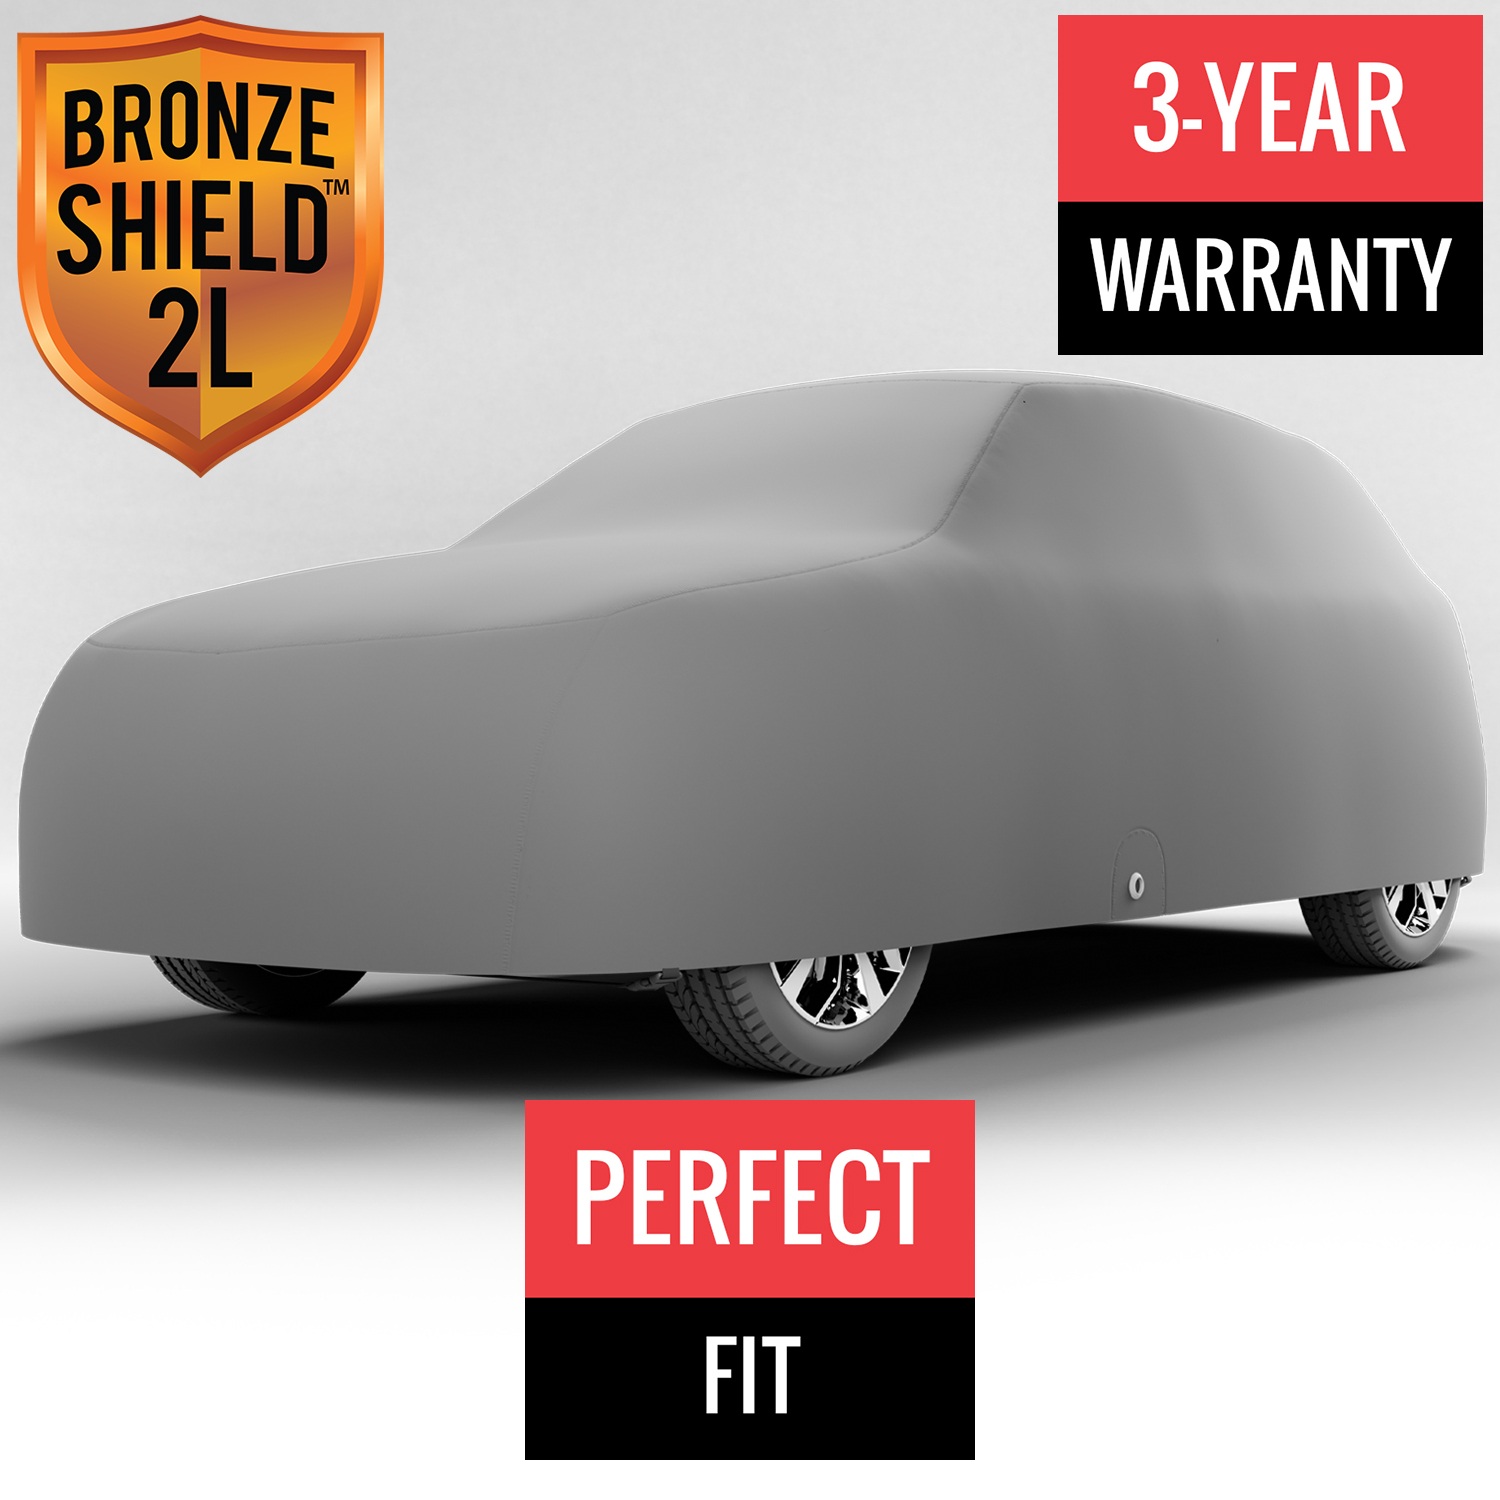 Bronze Shield 2L - Car Cover for Scion xB 2015 Wagon 4-Door